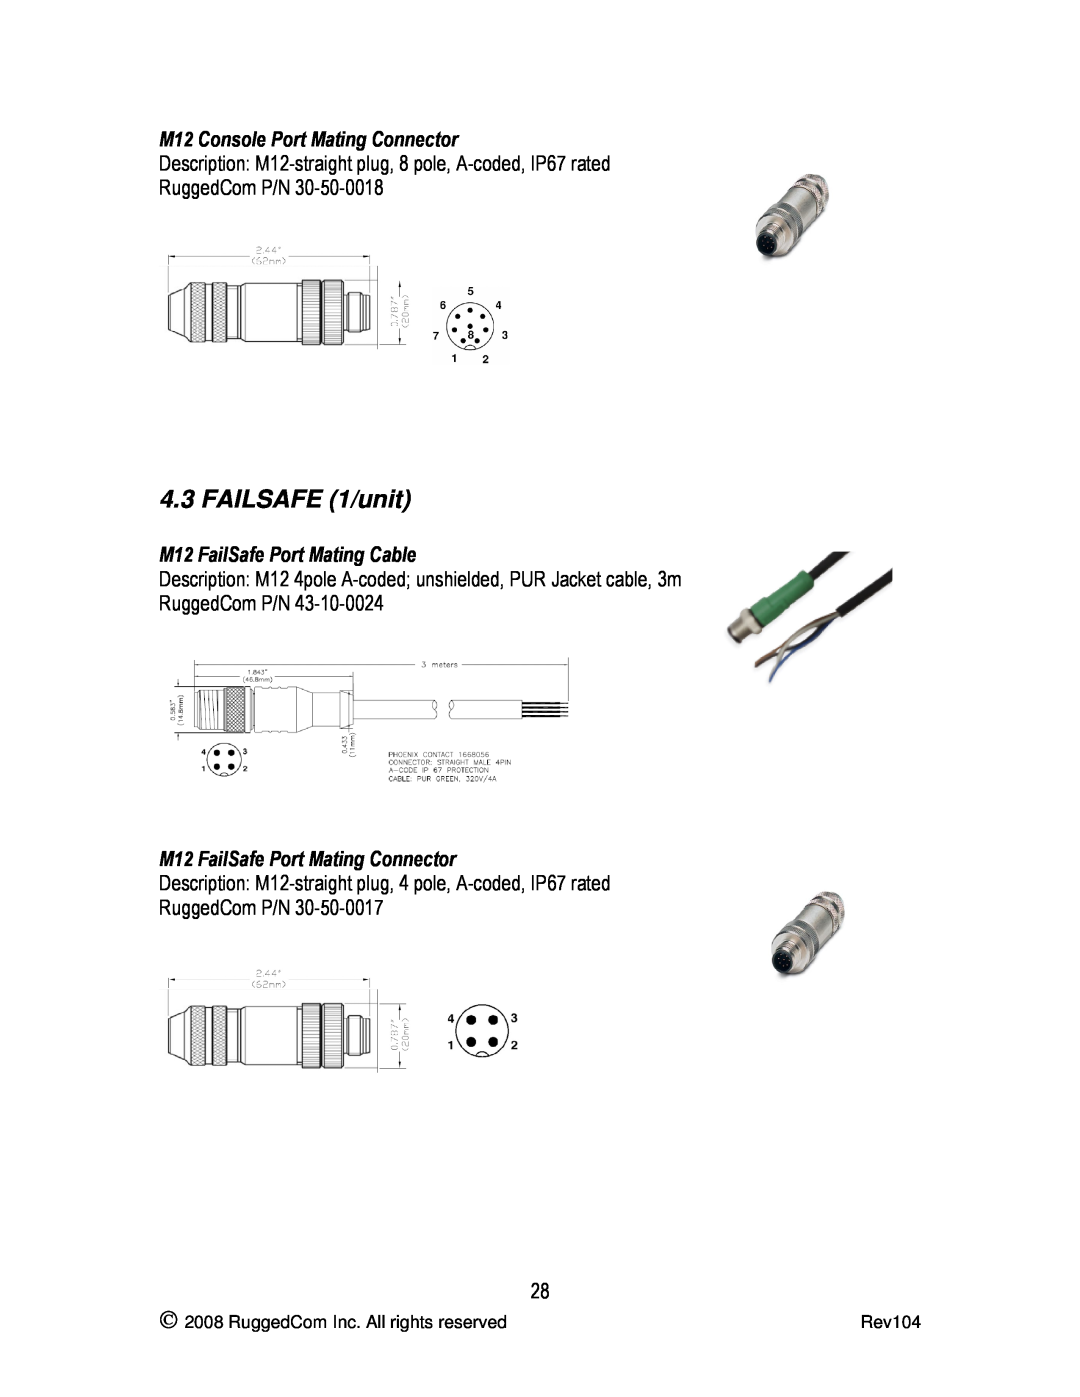 RuggedCom RS969 manual FAILSAFE 1/unit, M12 Console Port Mating Connector, M12 FailSafe Port Mating Cable 